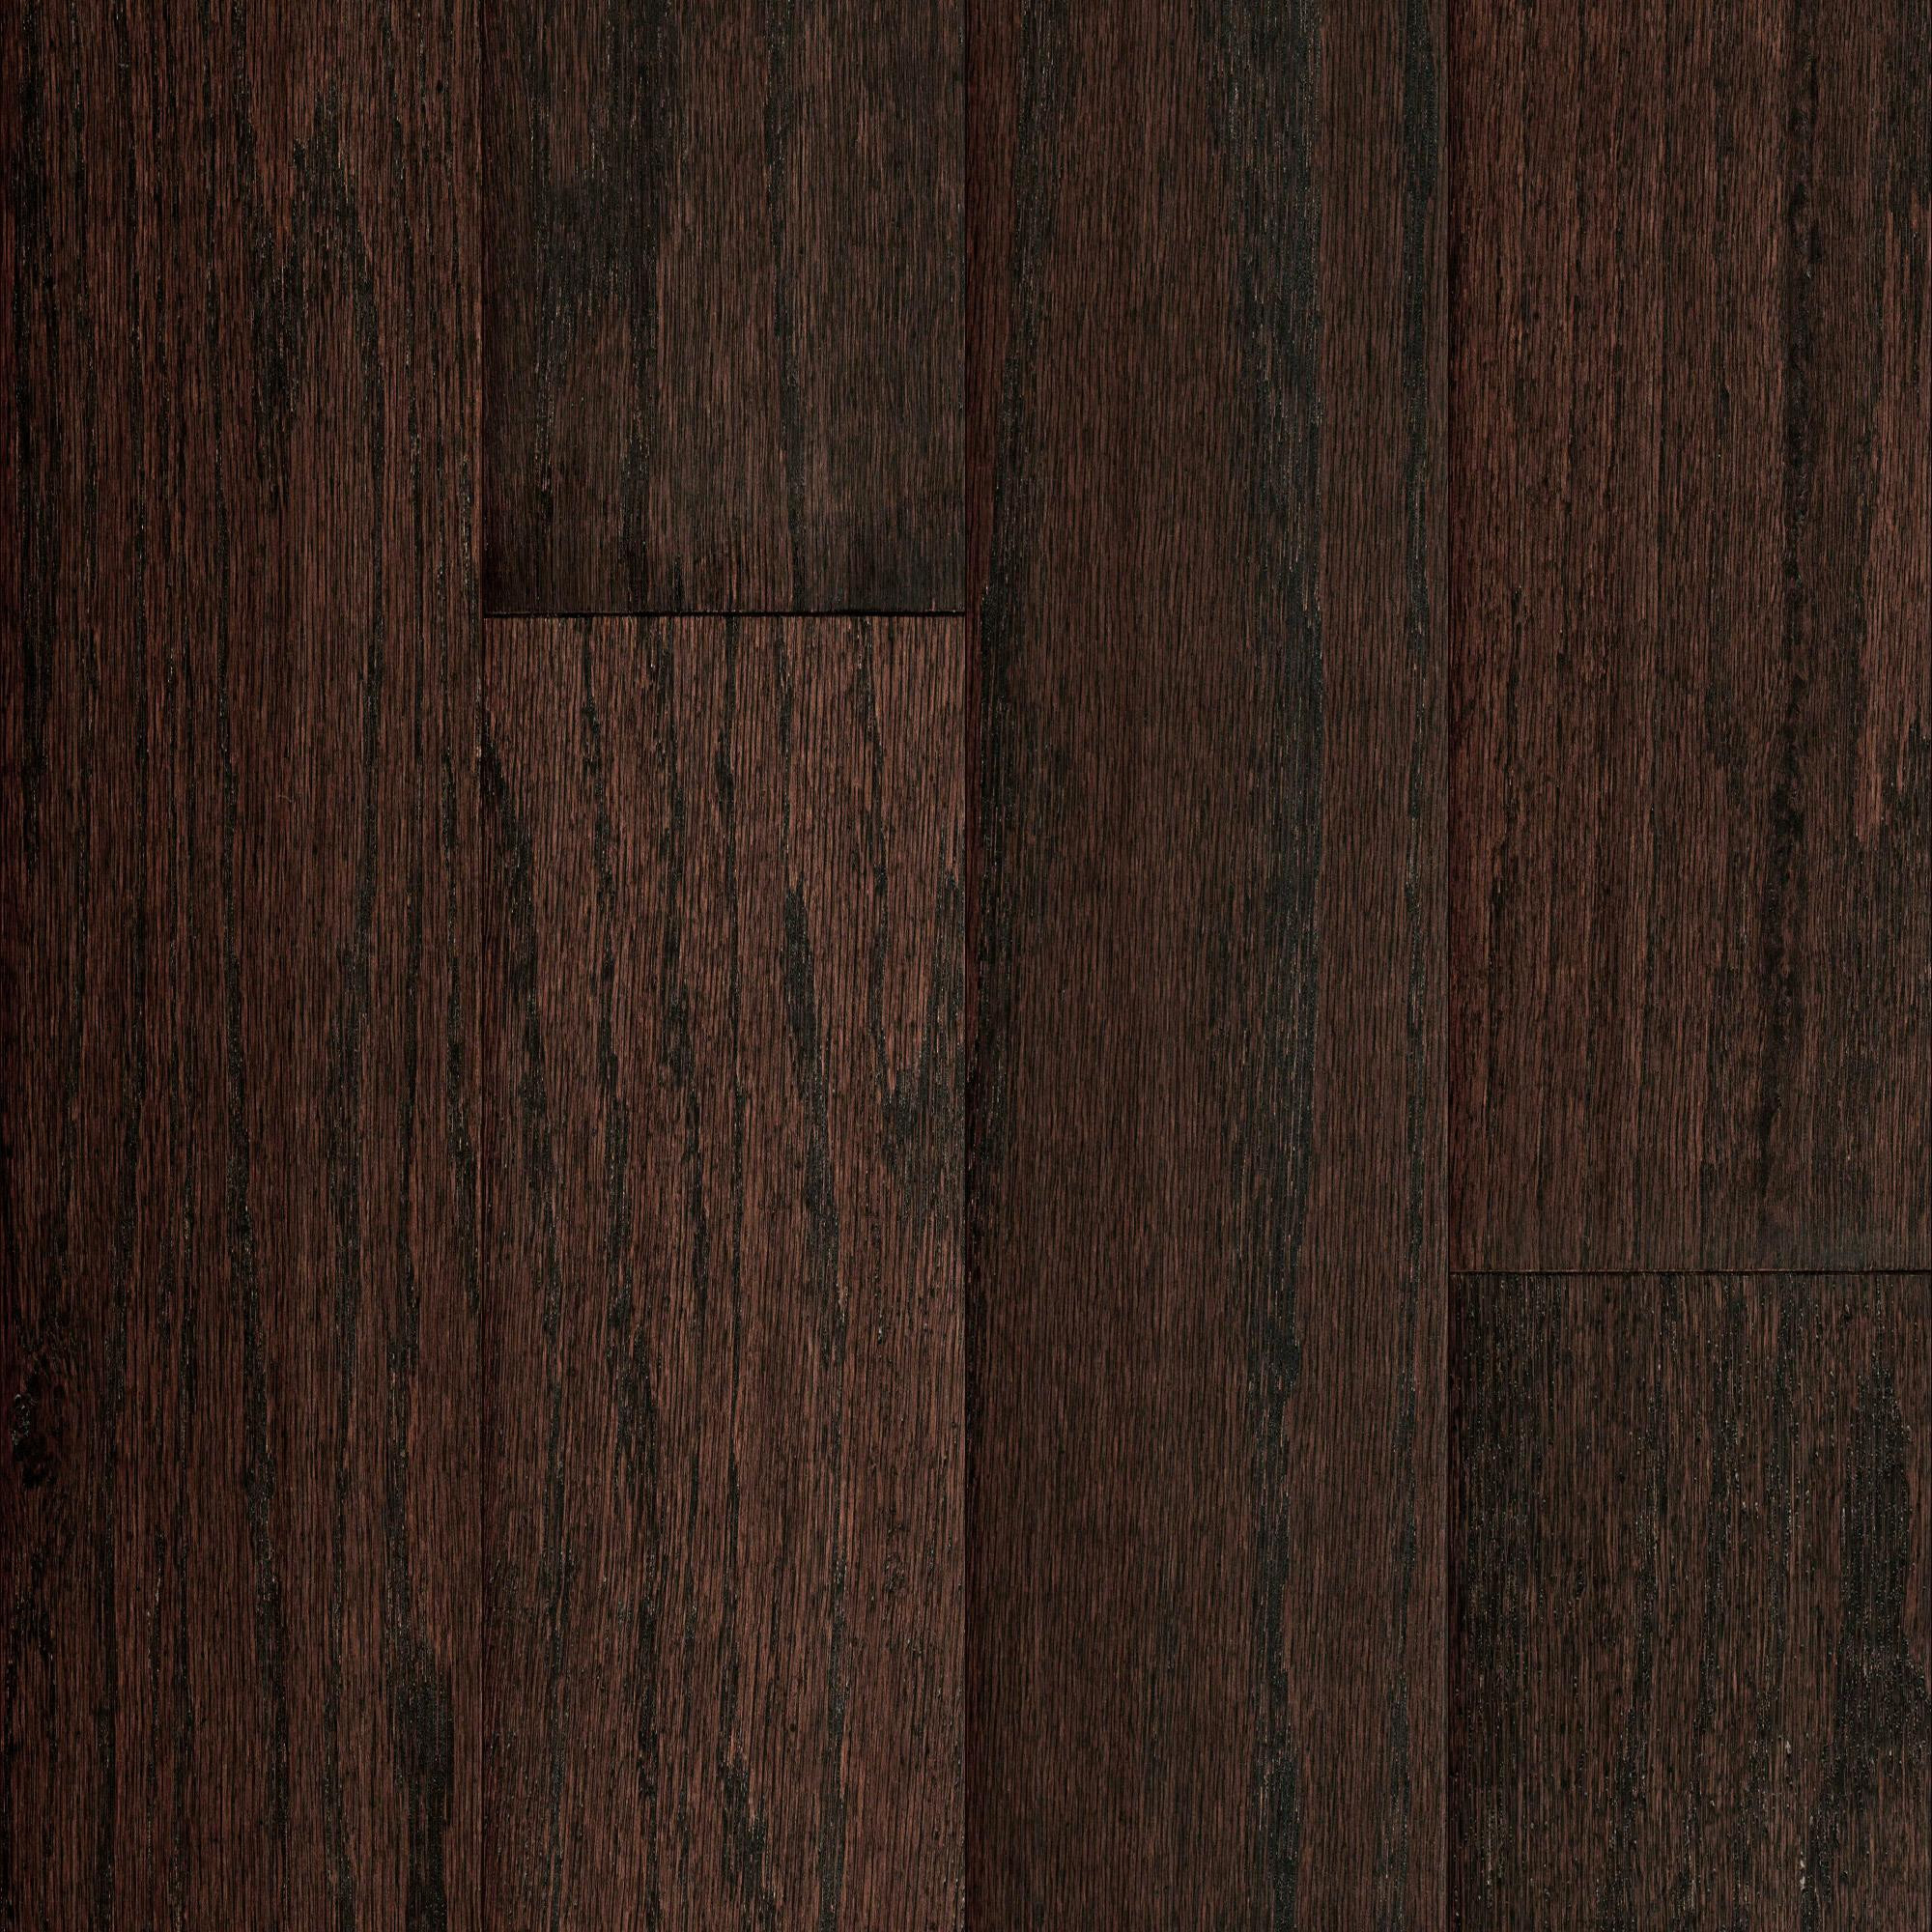 light wide plank hardwood floors of mullican newtown plank oak bridle 1 2 thick 5 wide engineered with mullican newtown plank oak bridle 1 2 thick 5 wide engineered hardwood flooring